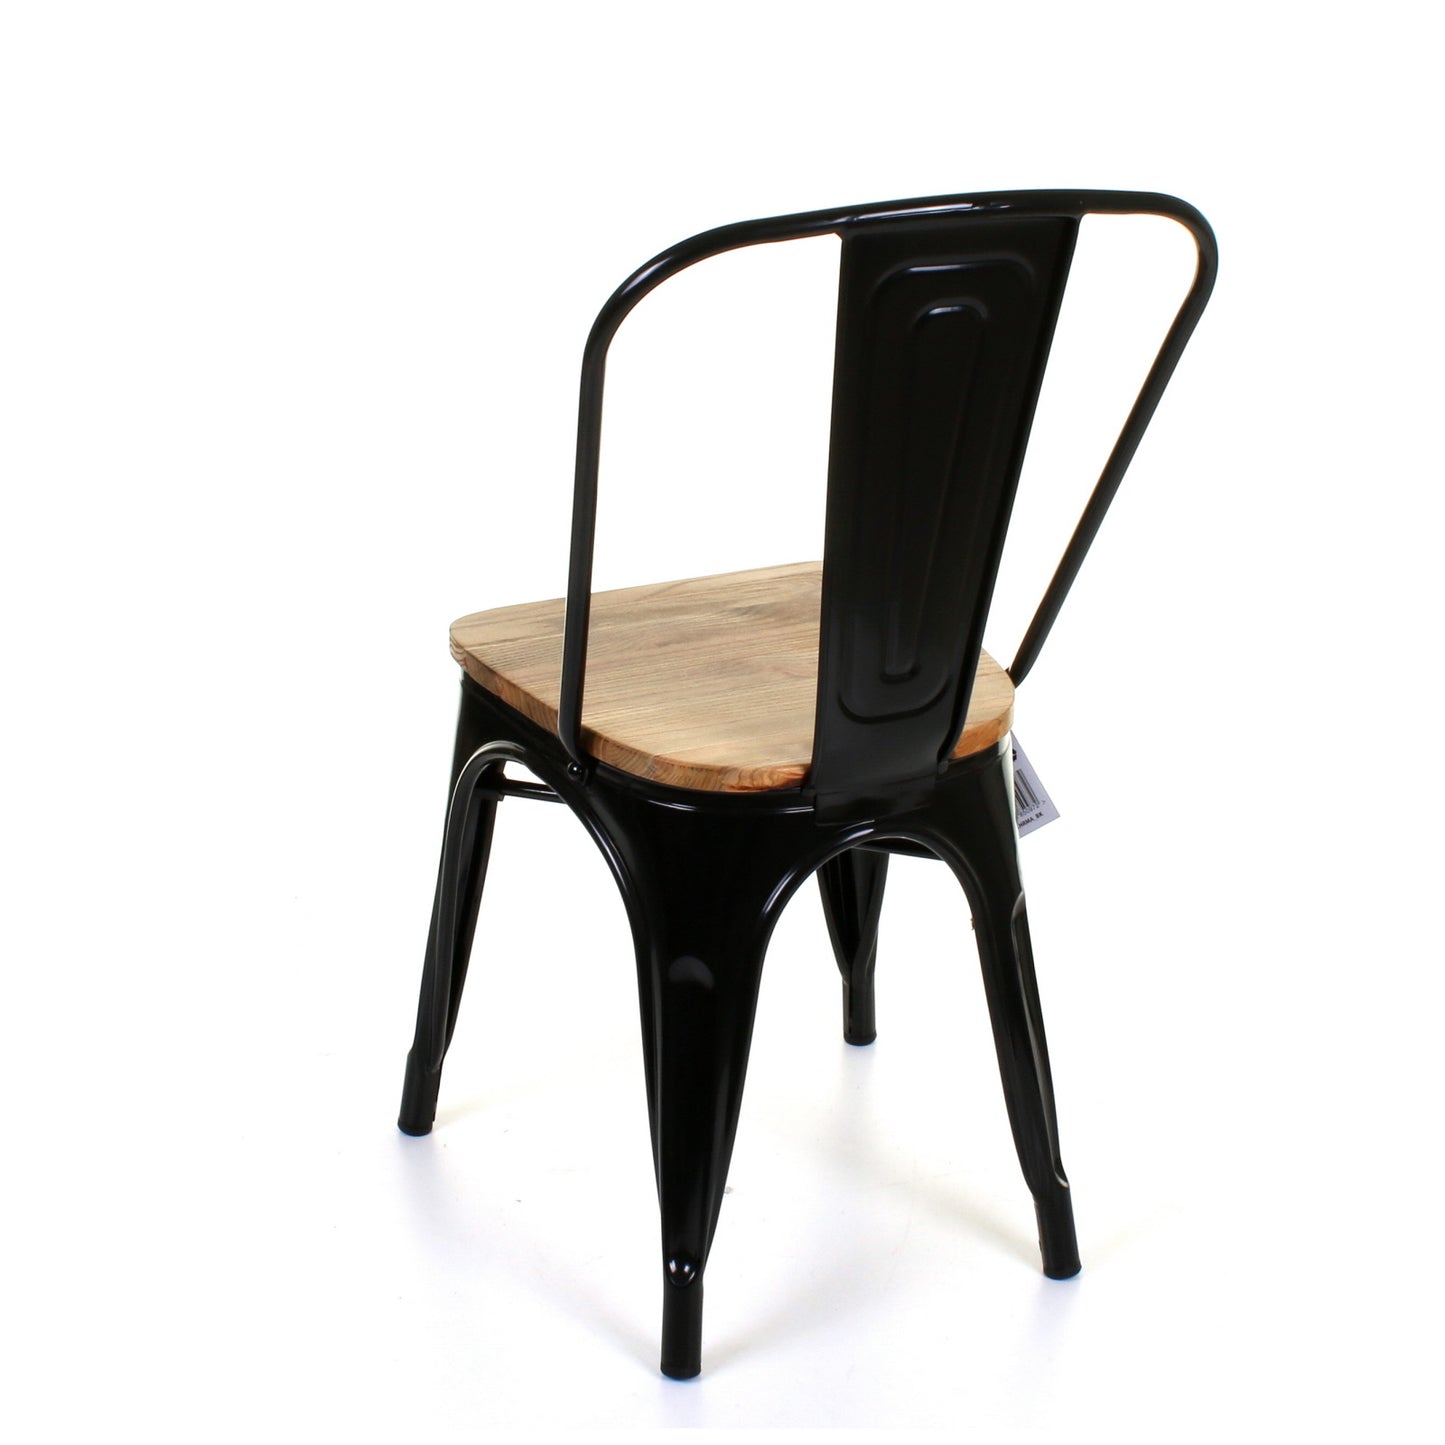 Palermo Chairs - Black